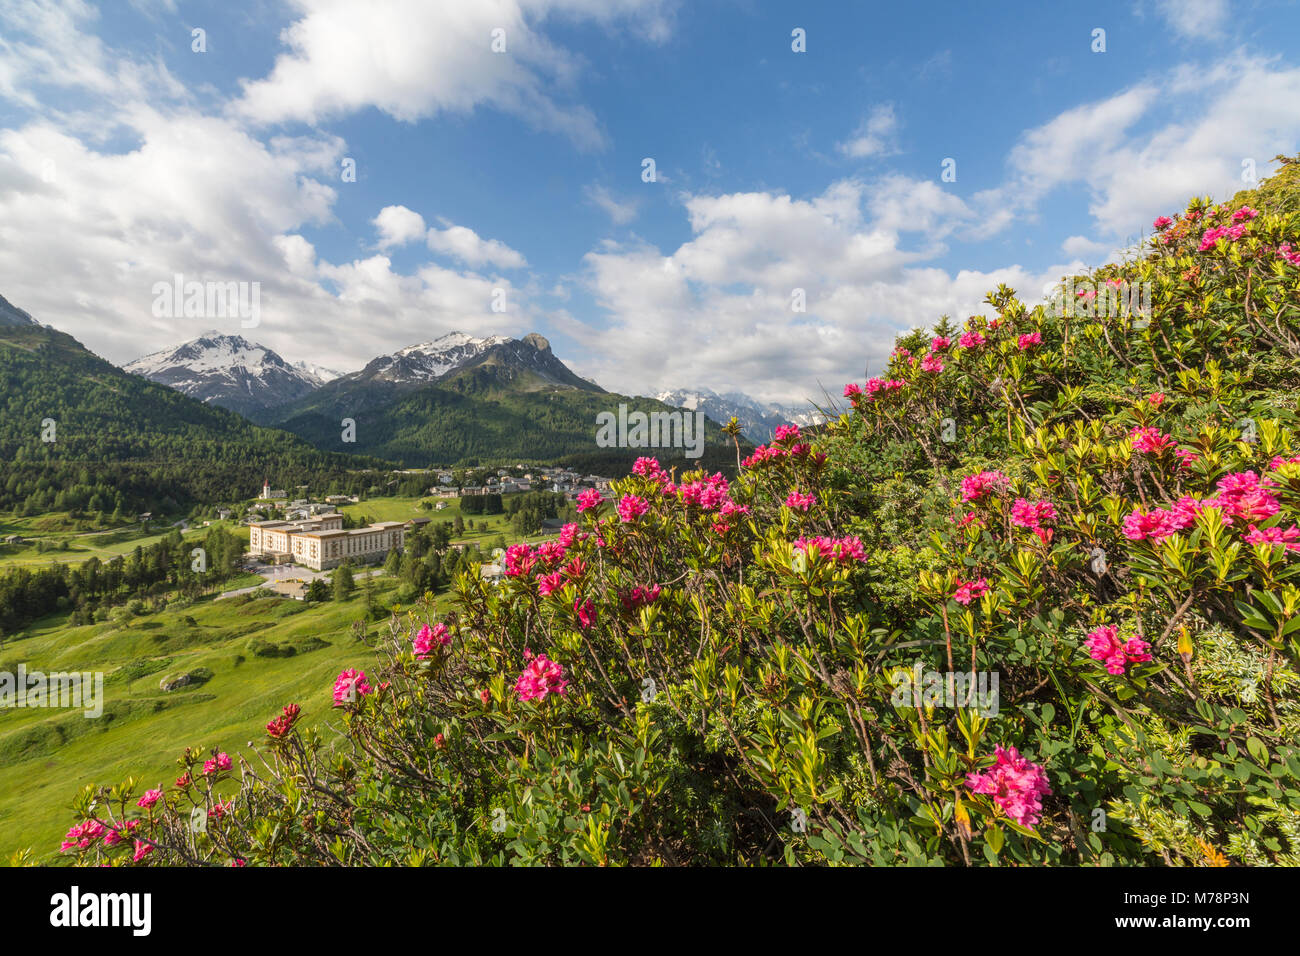 Rhododendrons in bloom, Maloja, Bregaglia Valley, Engadine, Canton of Graubunden (Grisons), Switzerland, Europe Stock Photo